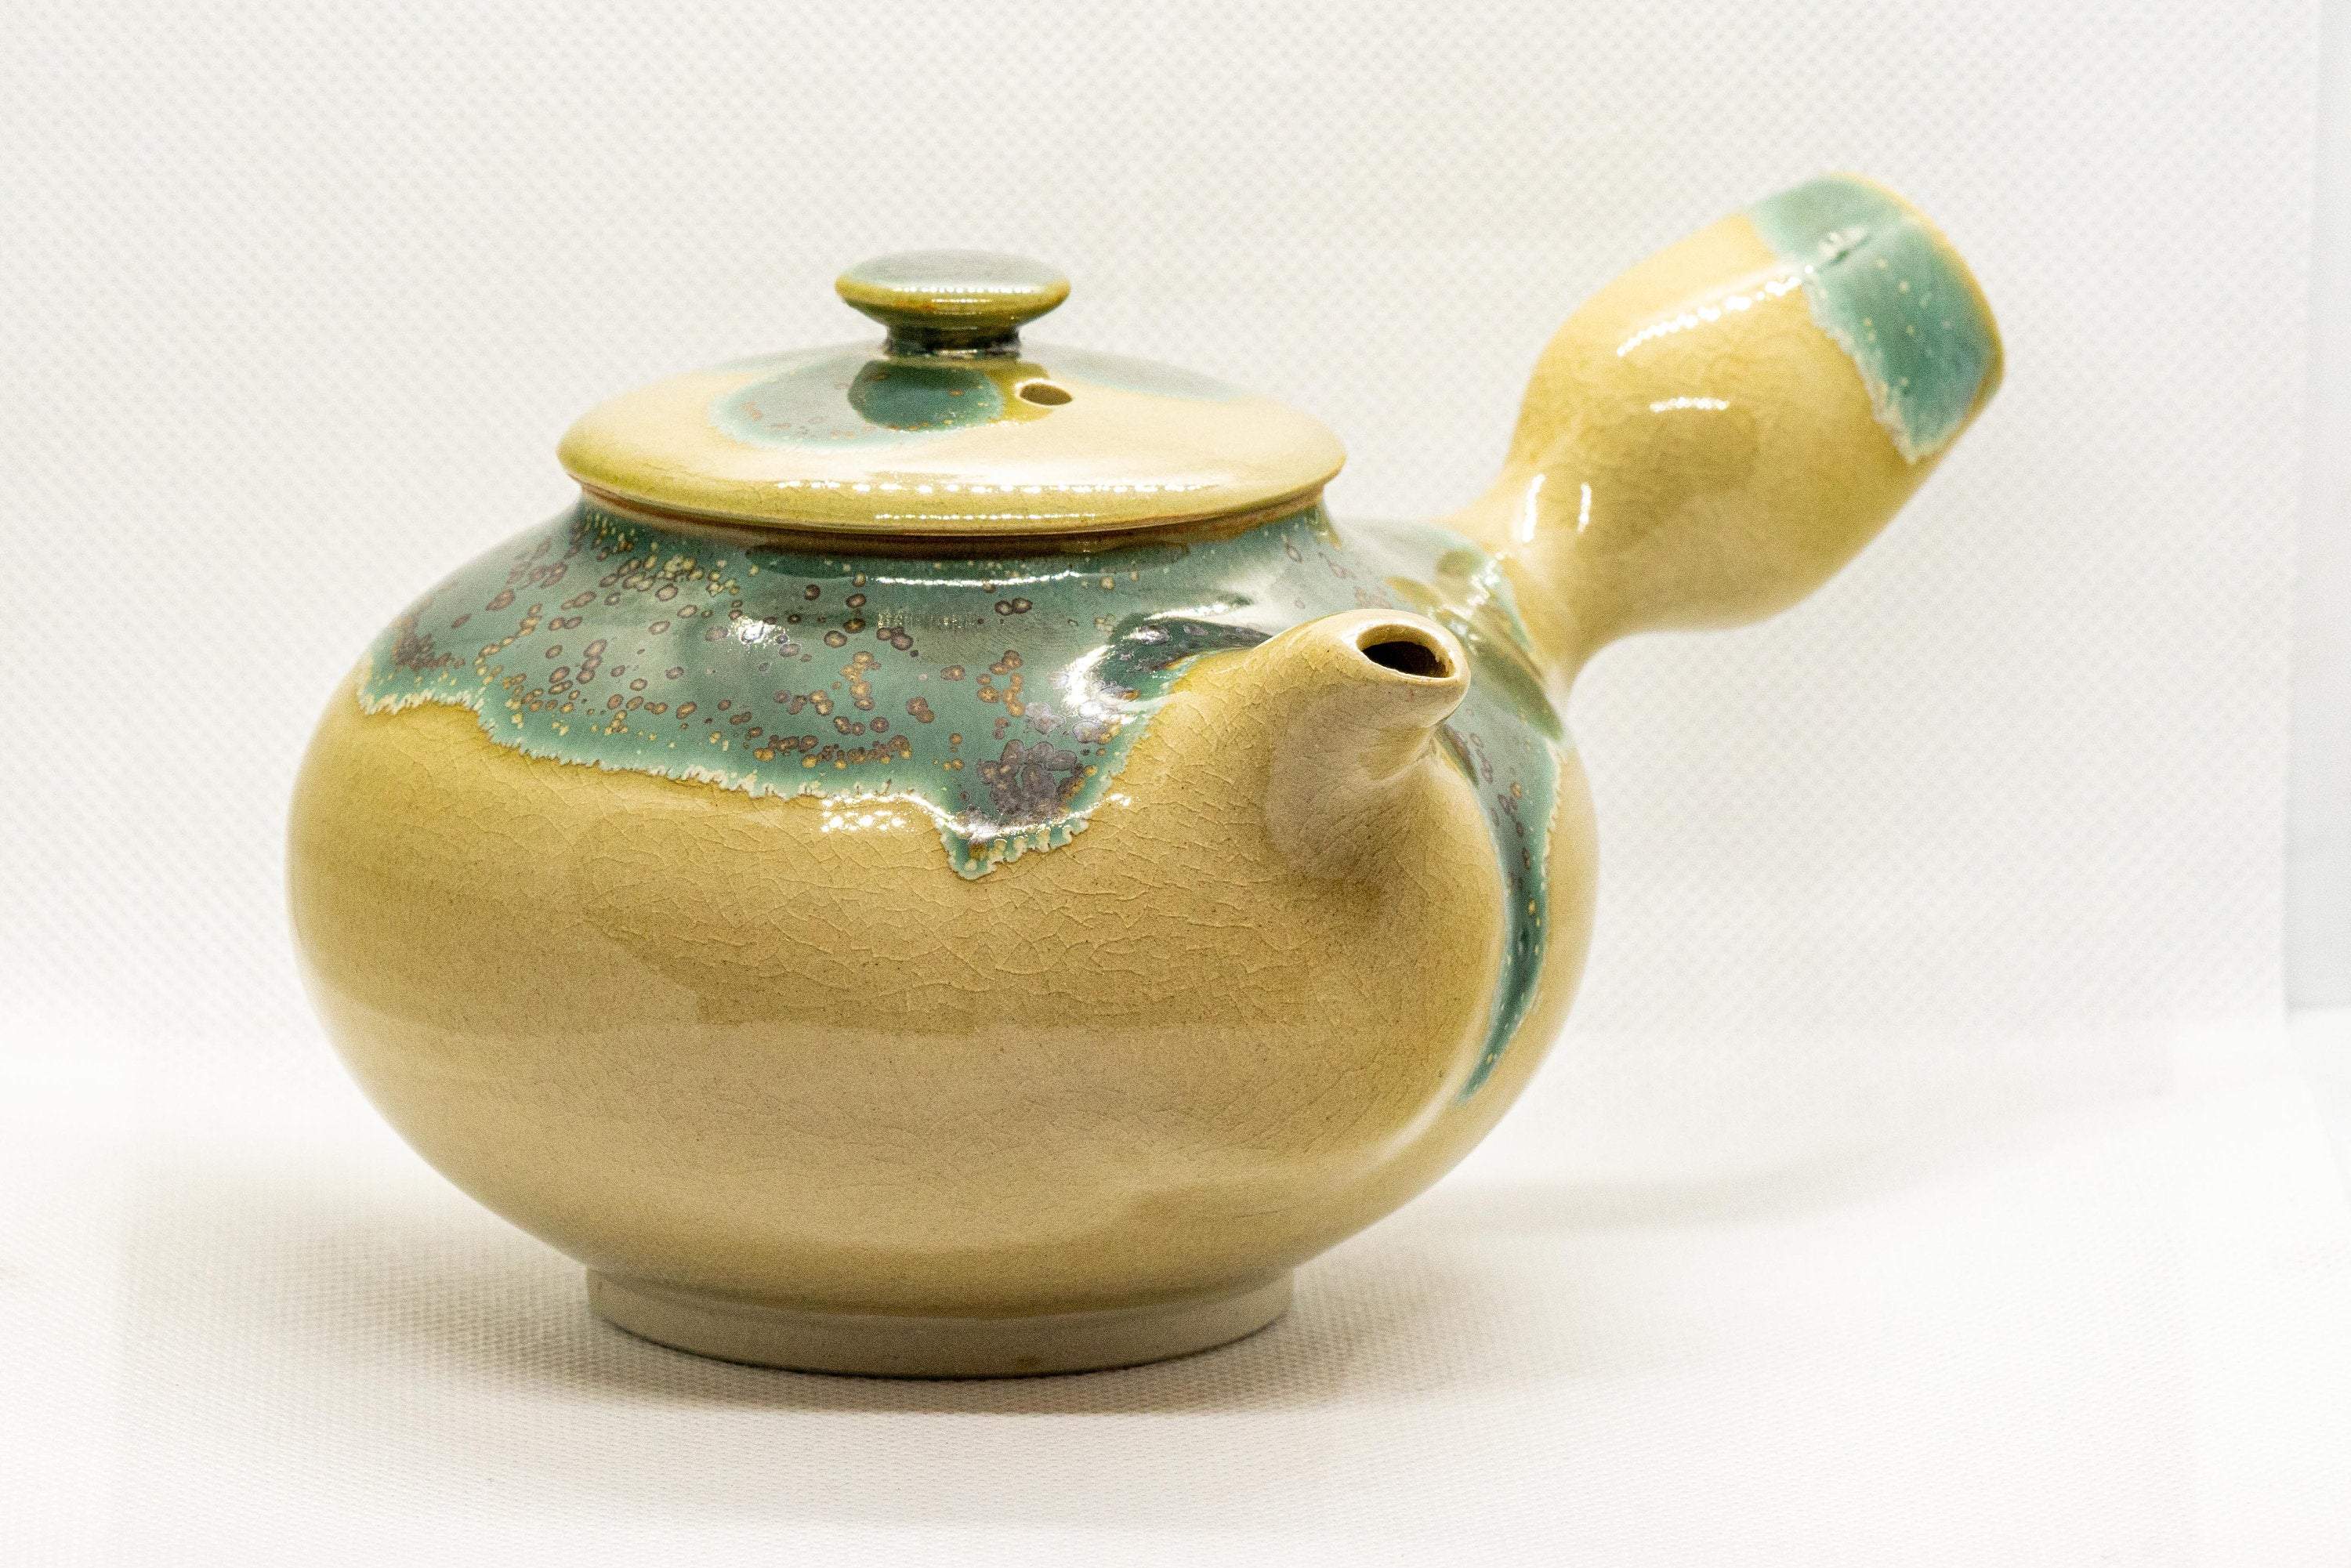 Japanese Kyusu - Agano-yaki teapot - gold-flecked blue-green enamel - 380ml - Tezumi